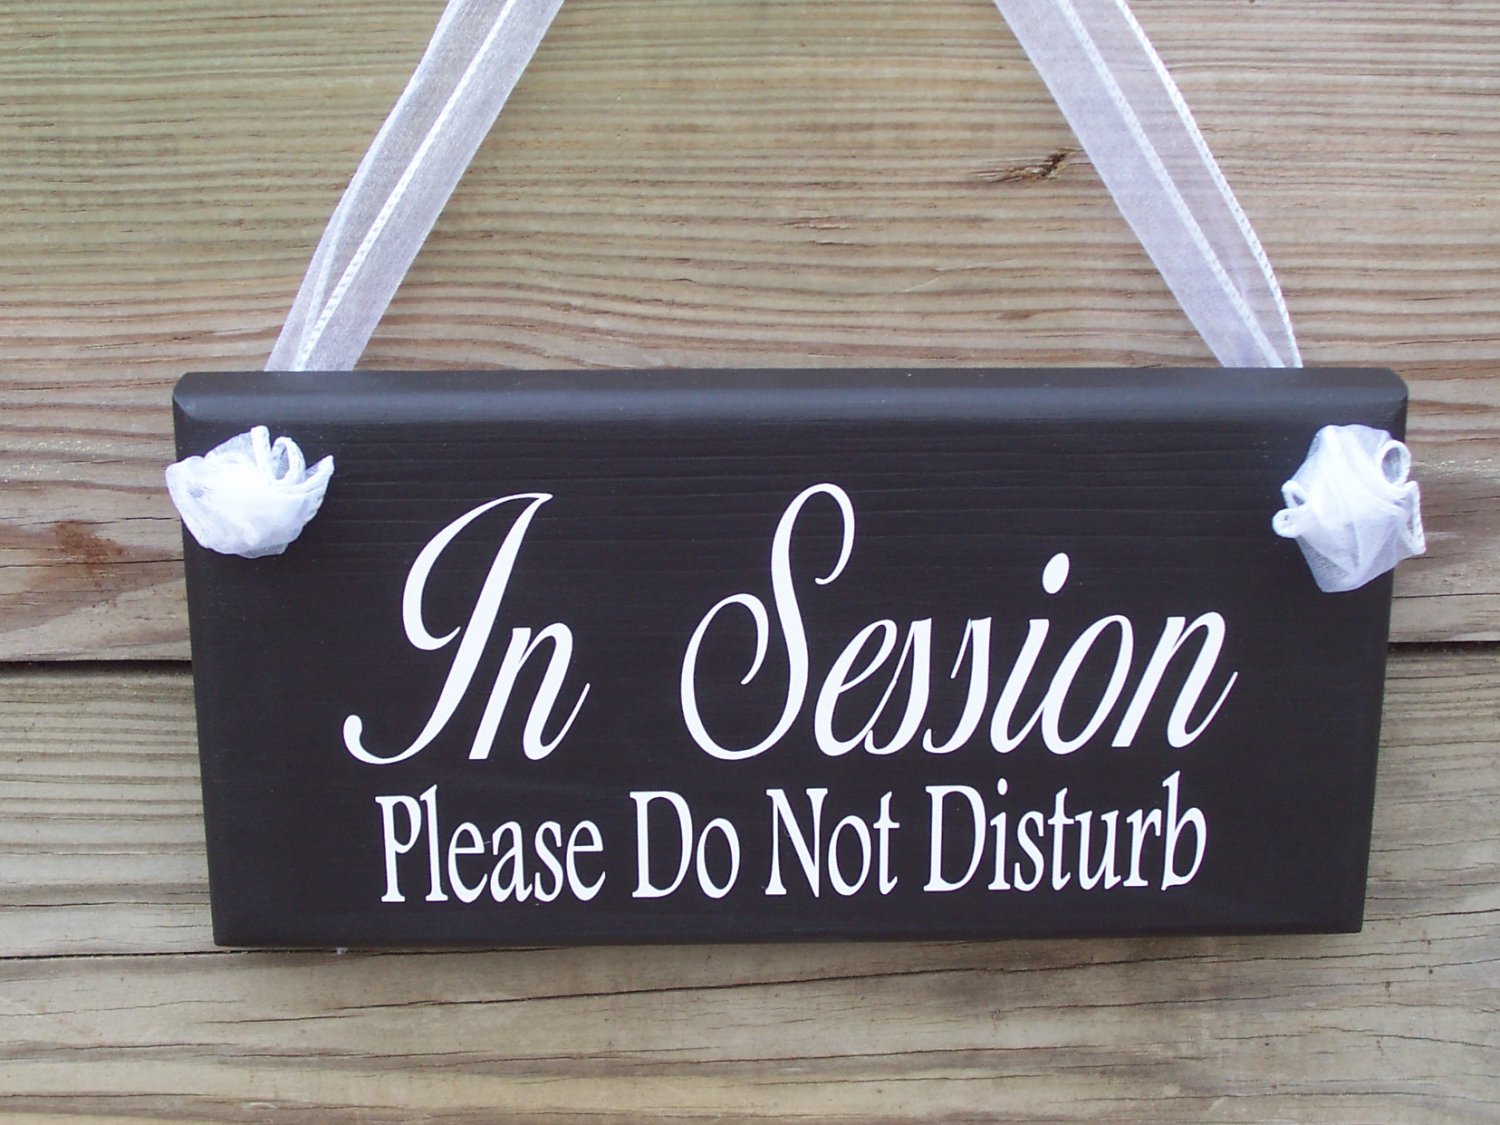 In Session Please Do Not Disturb Wood Vinyl Sign Business Office Door